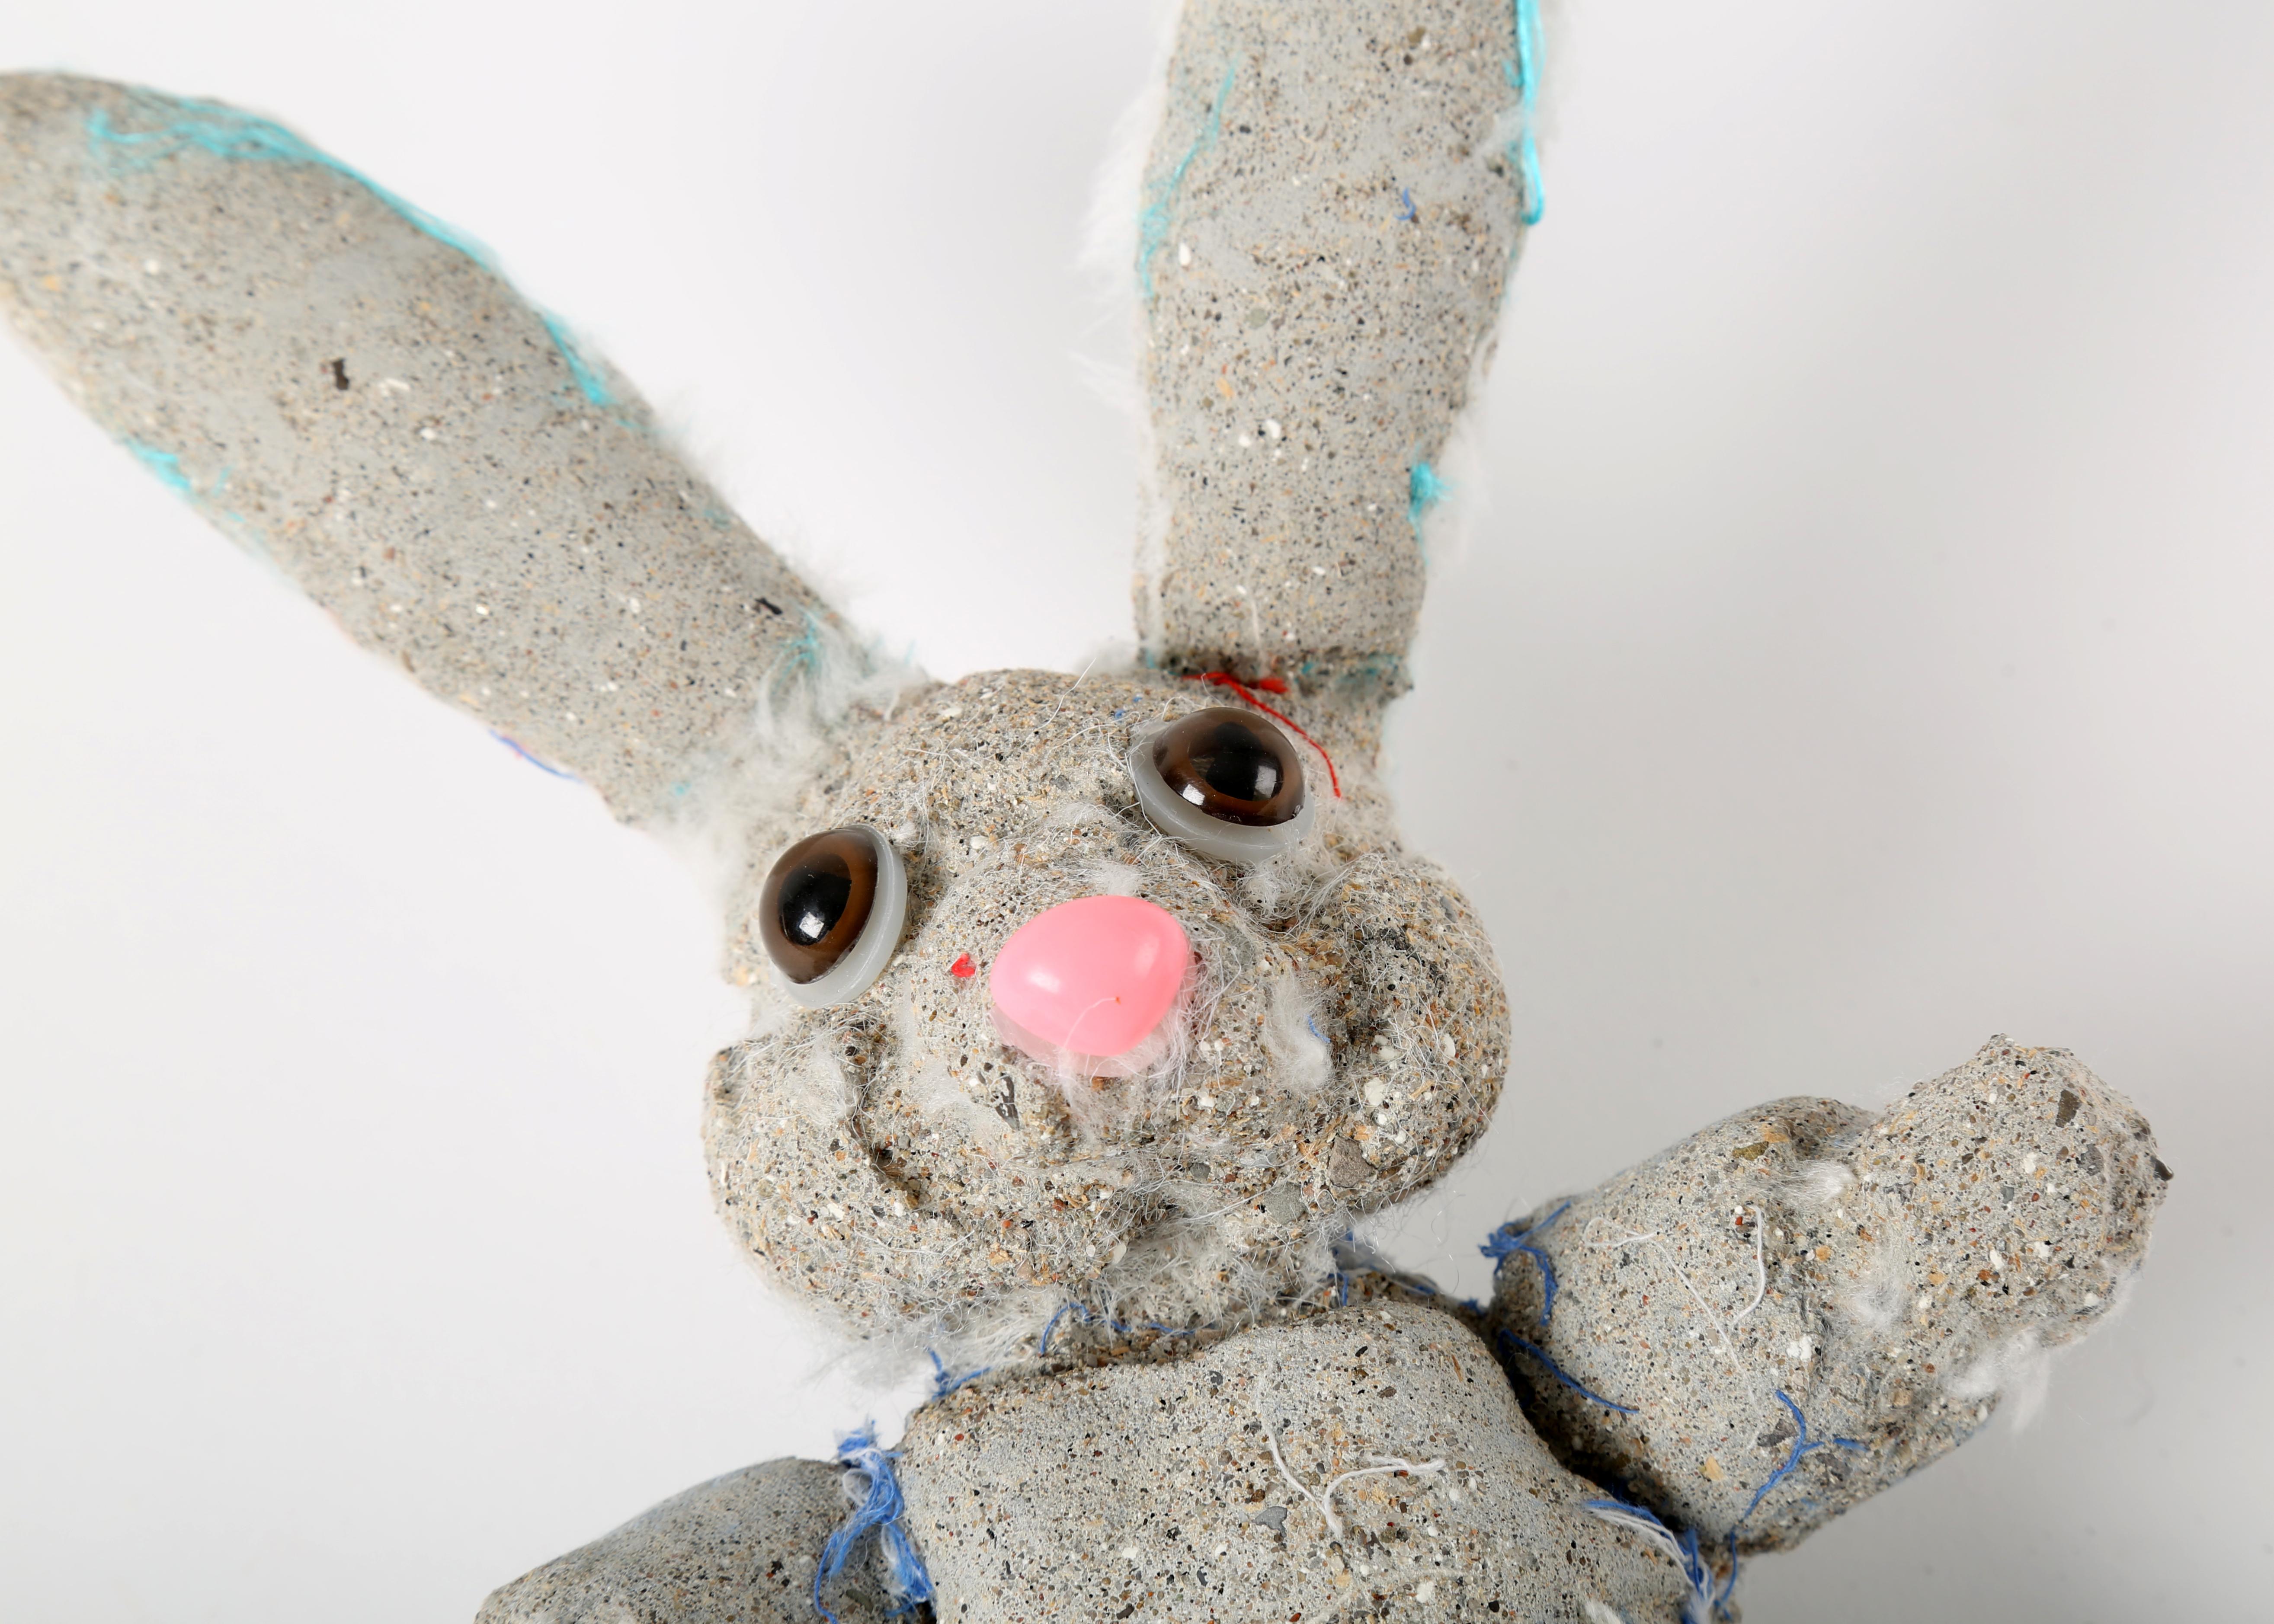 Ross Bonfanti
Threads bunny, 2015
Concrete, mixed media
10 1/4 x 5 1/4 x 2 3/4 inches  (26 x 13.3 x 7 cm)